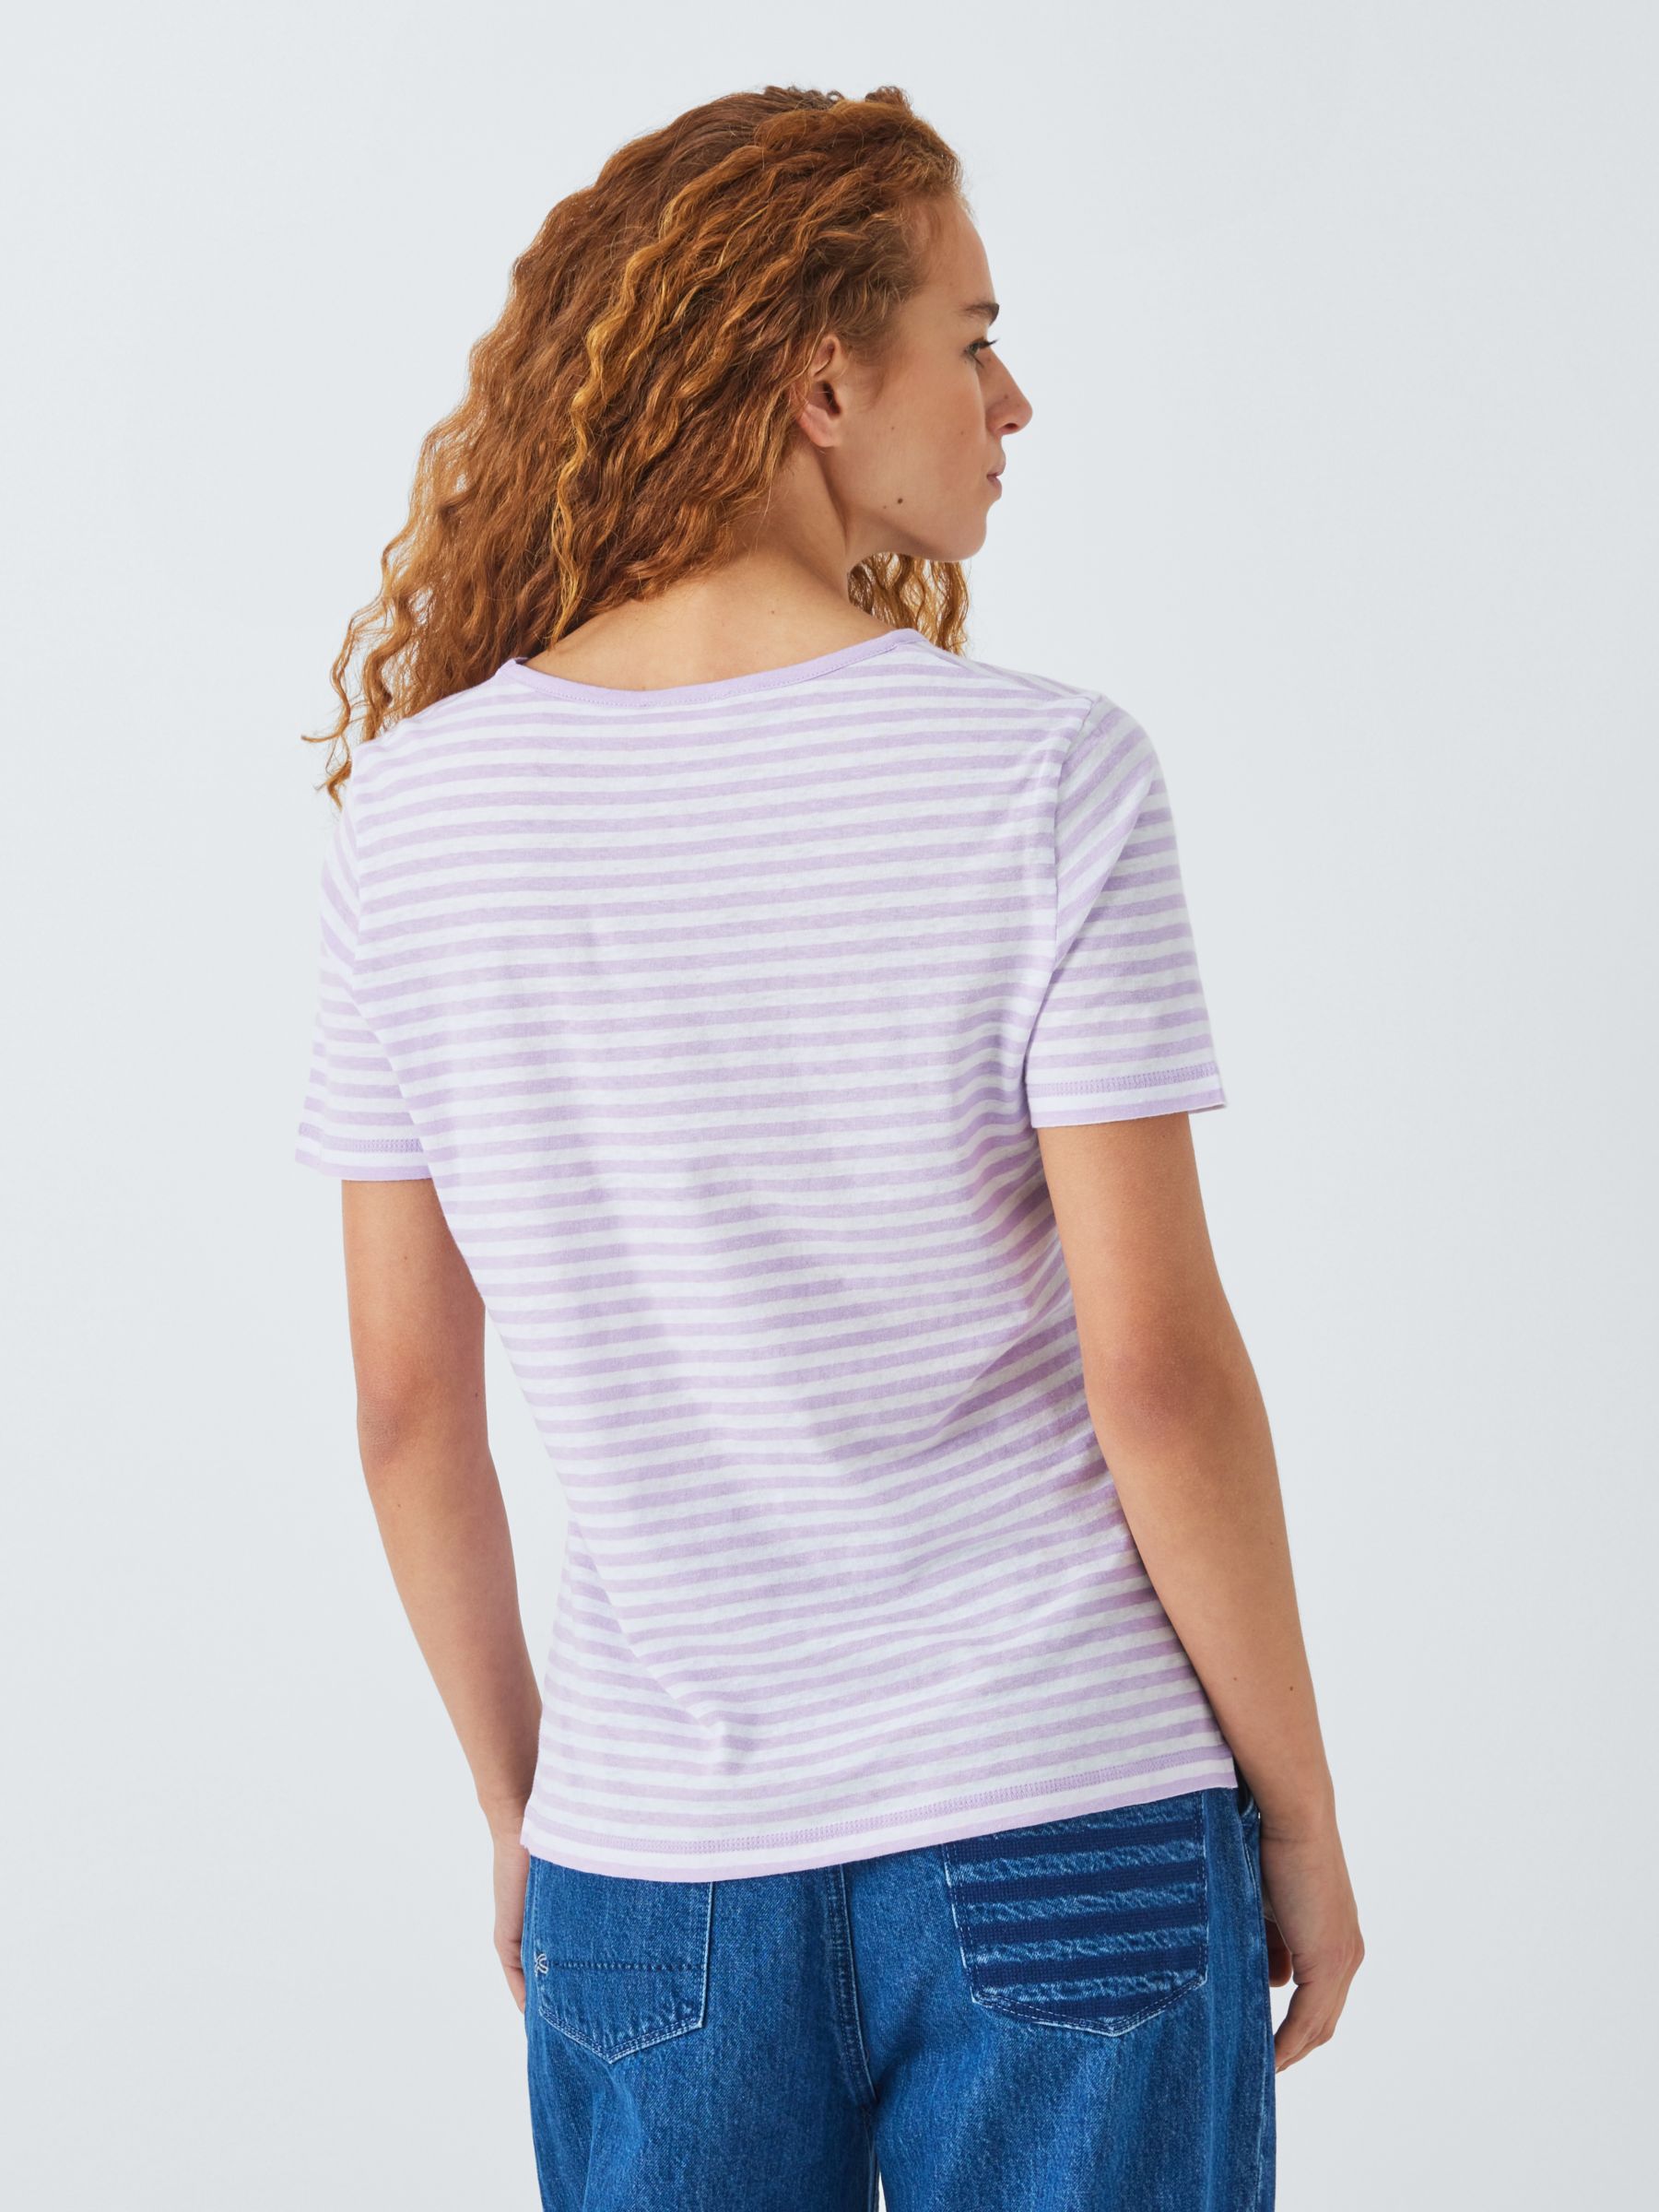 Armor Lux Striped Lightweight Striped Jersey T-Shirt, White/Pink, XL